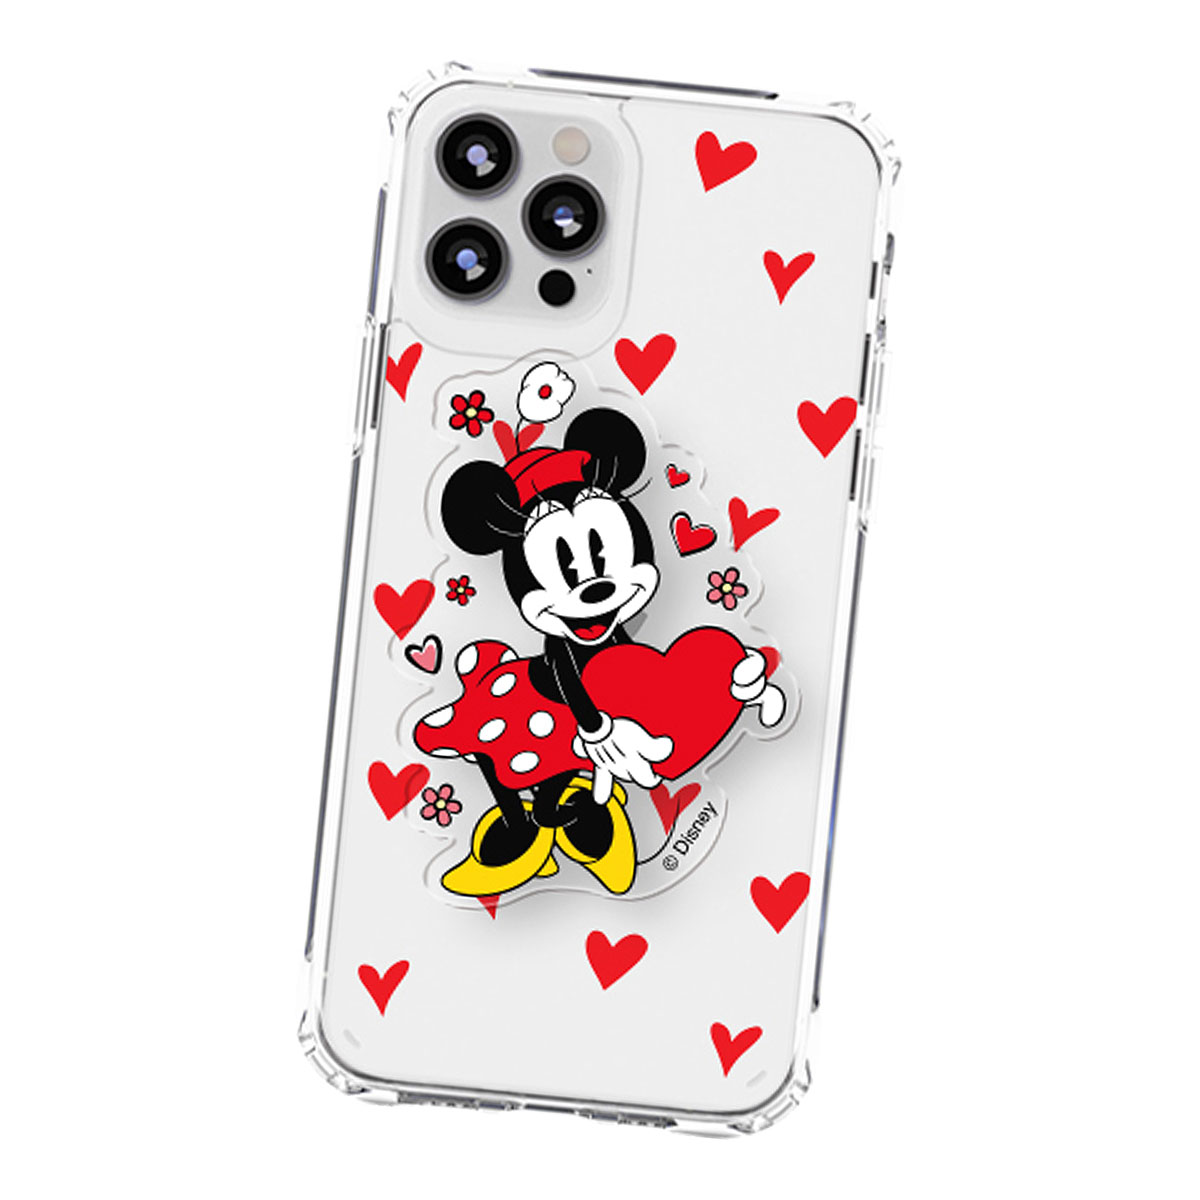 Disney Heart Acryl Smart Tok Jelly Hard ケース セット iP...